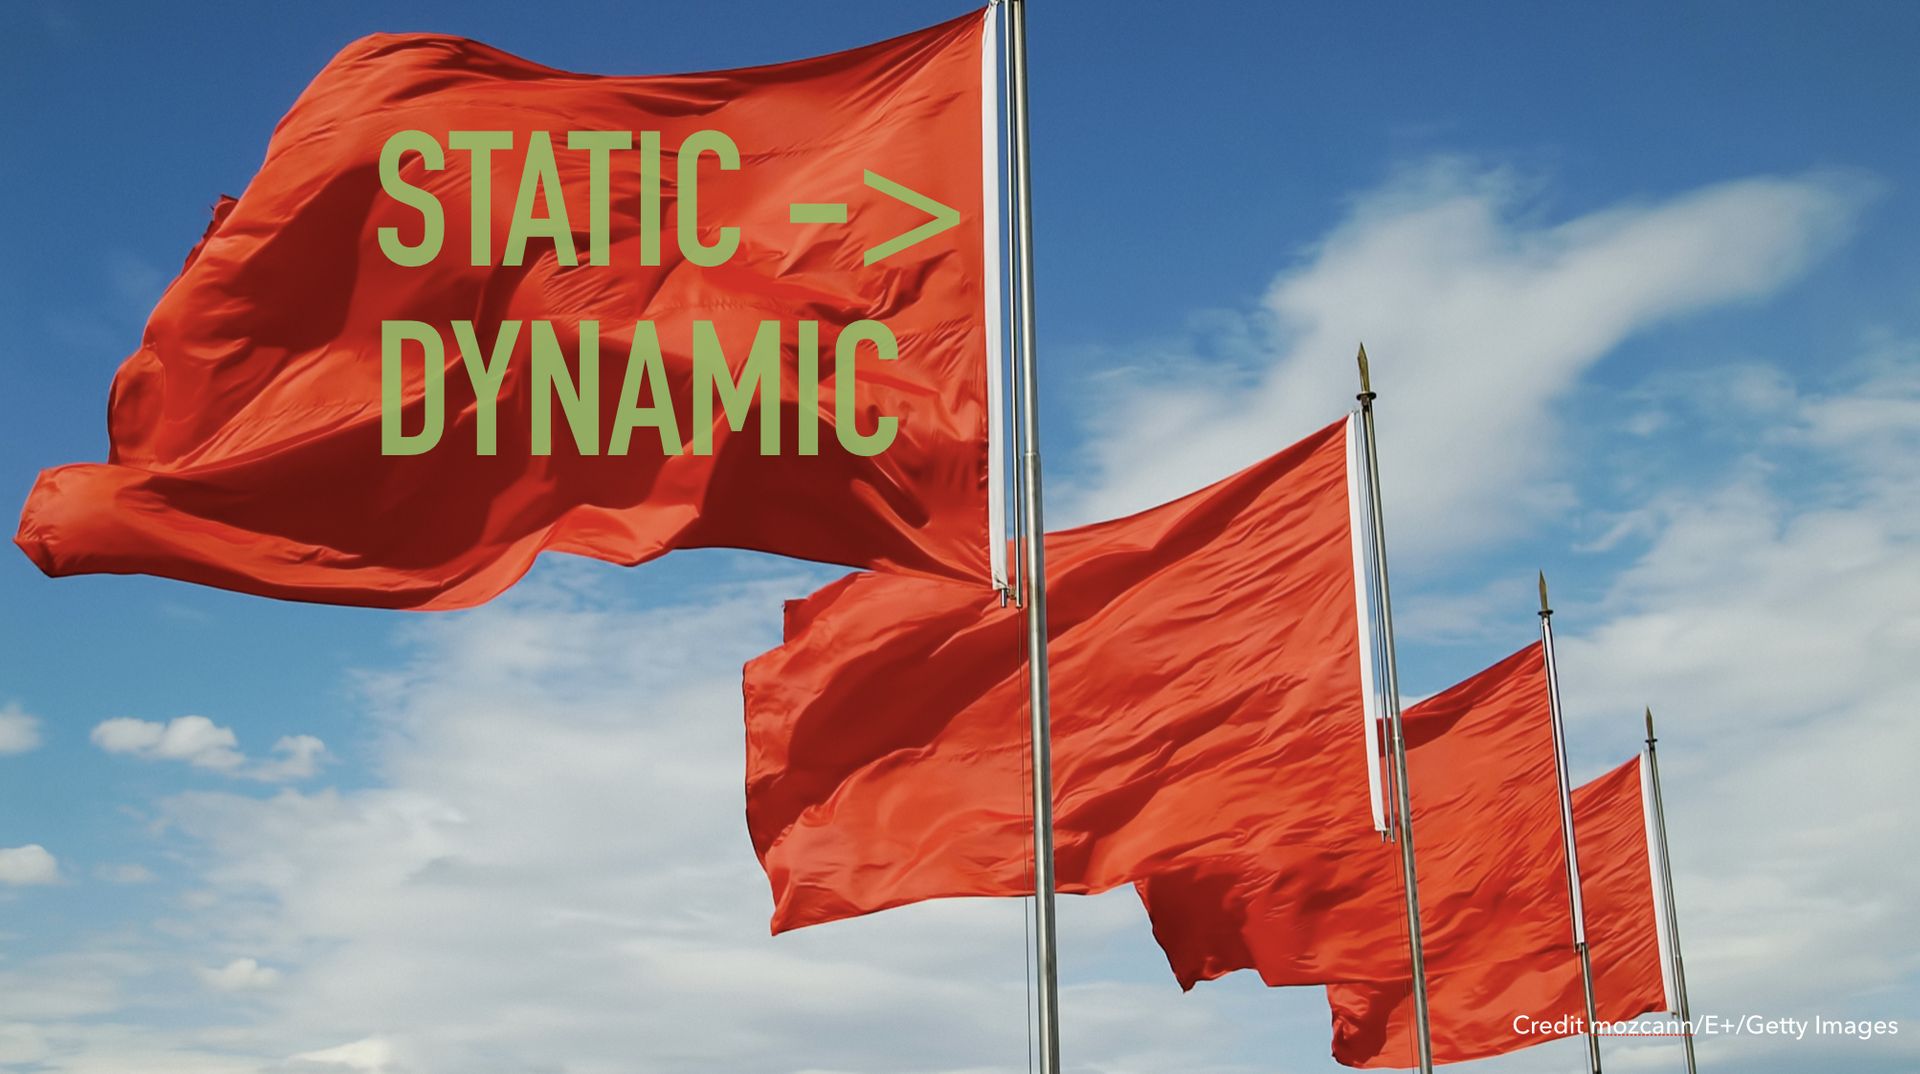 Slide text: Static -> Dynanic